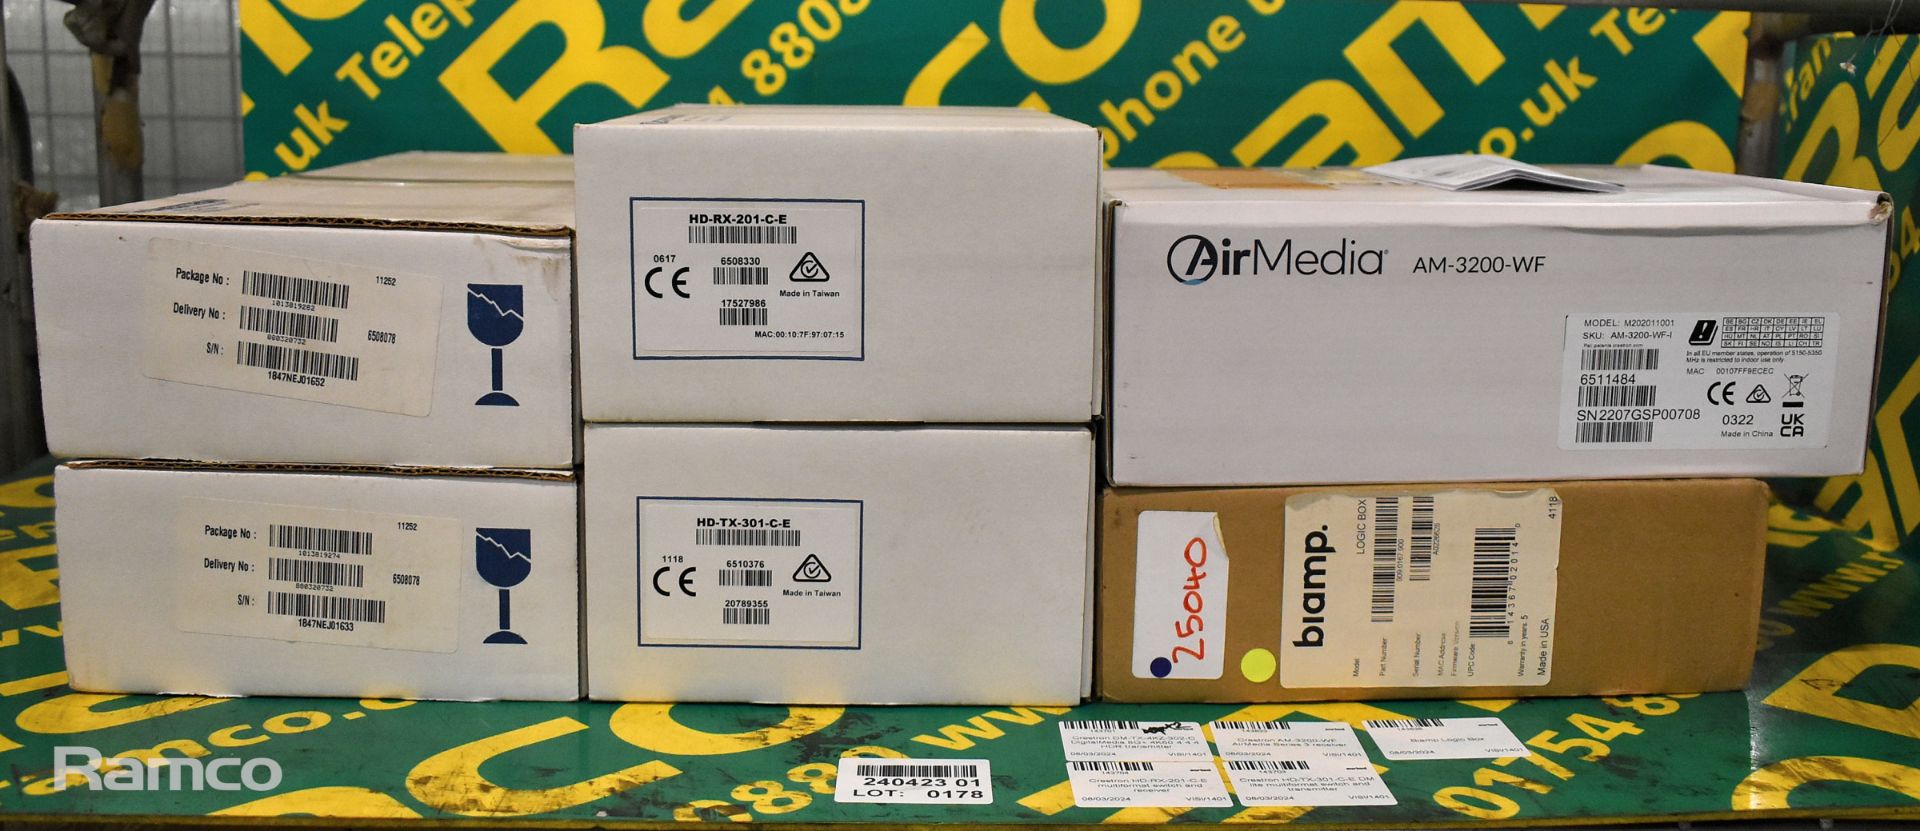 Crestron AM-3200-WF AirMedia Series 3 receiver, Biamp Logic Box & more - see desc.